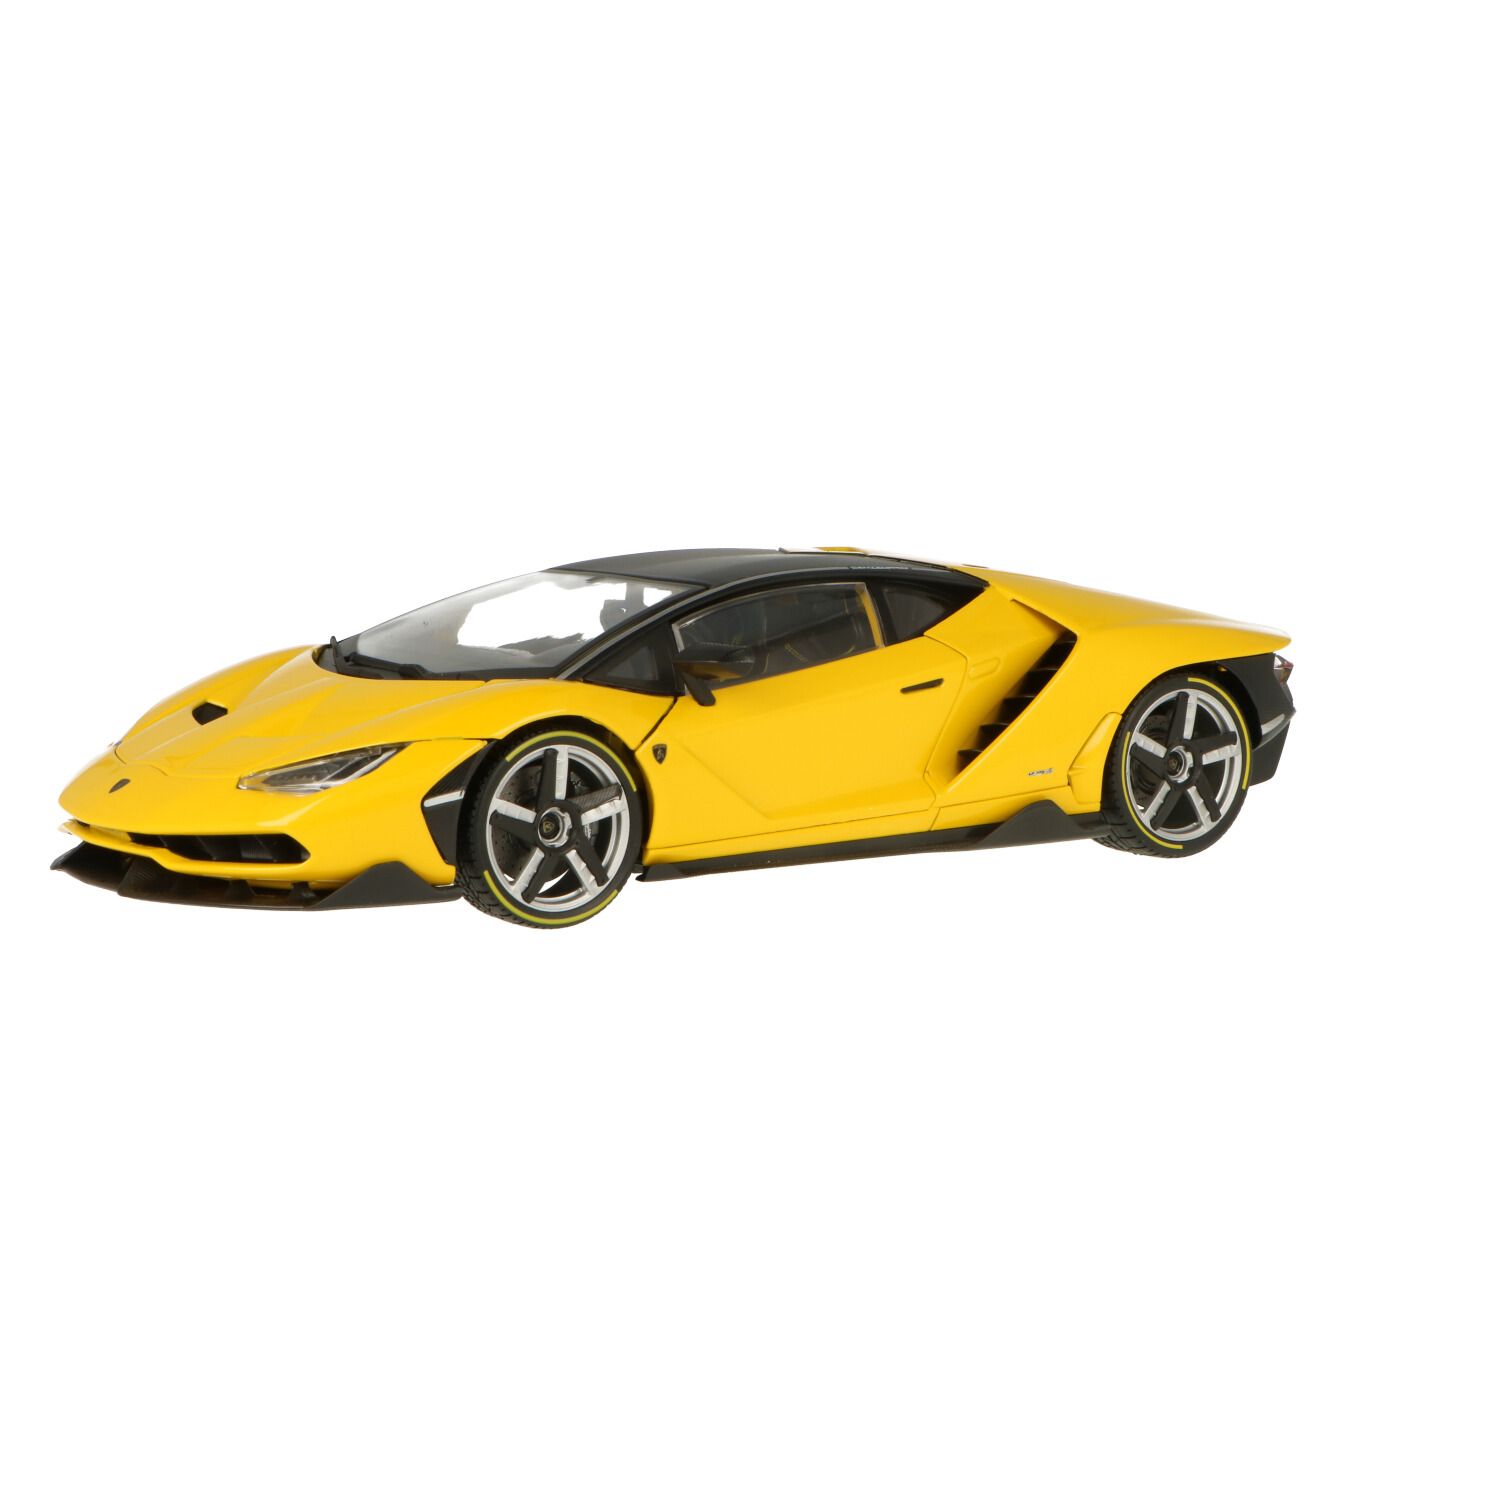 Maisto 1:18 Lamborghini Centenario (10-38136-Metallic yellow) diecast